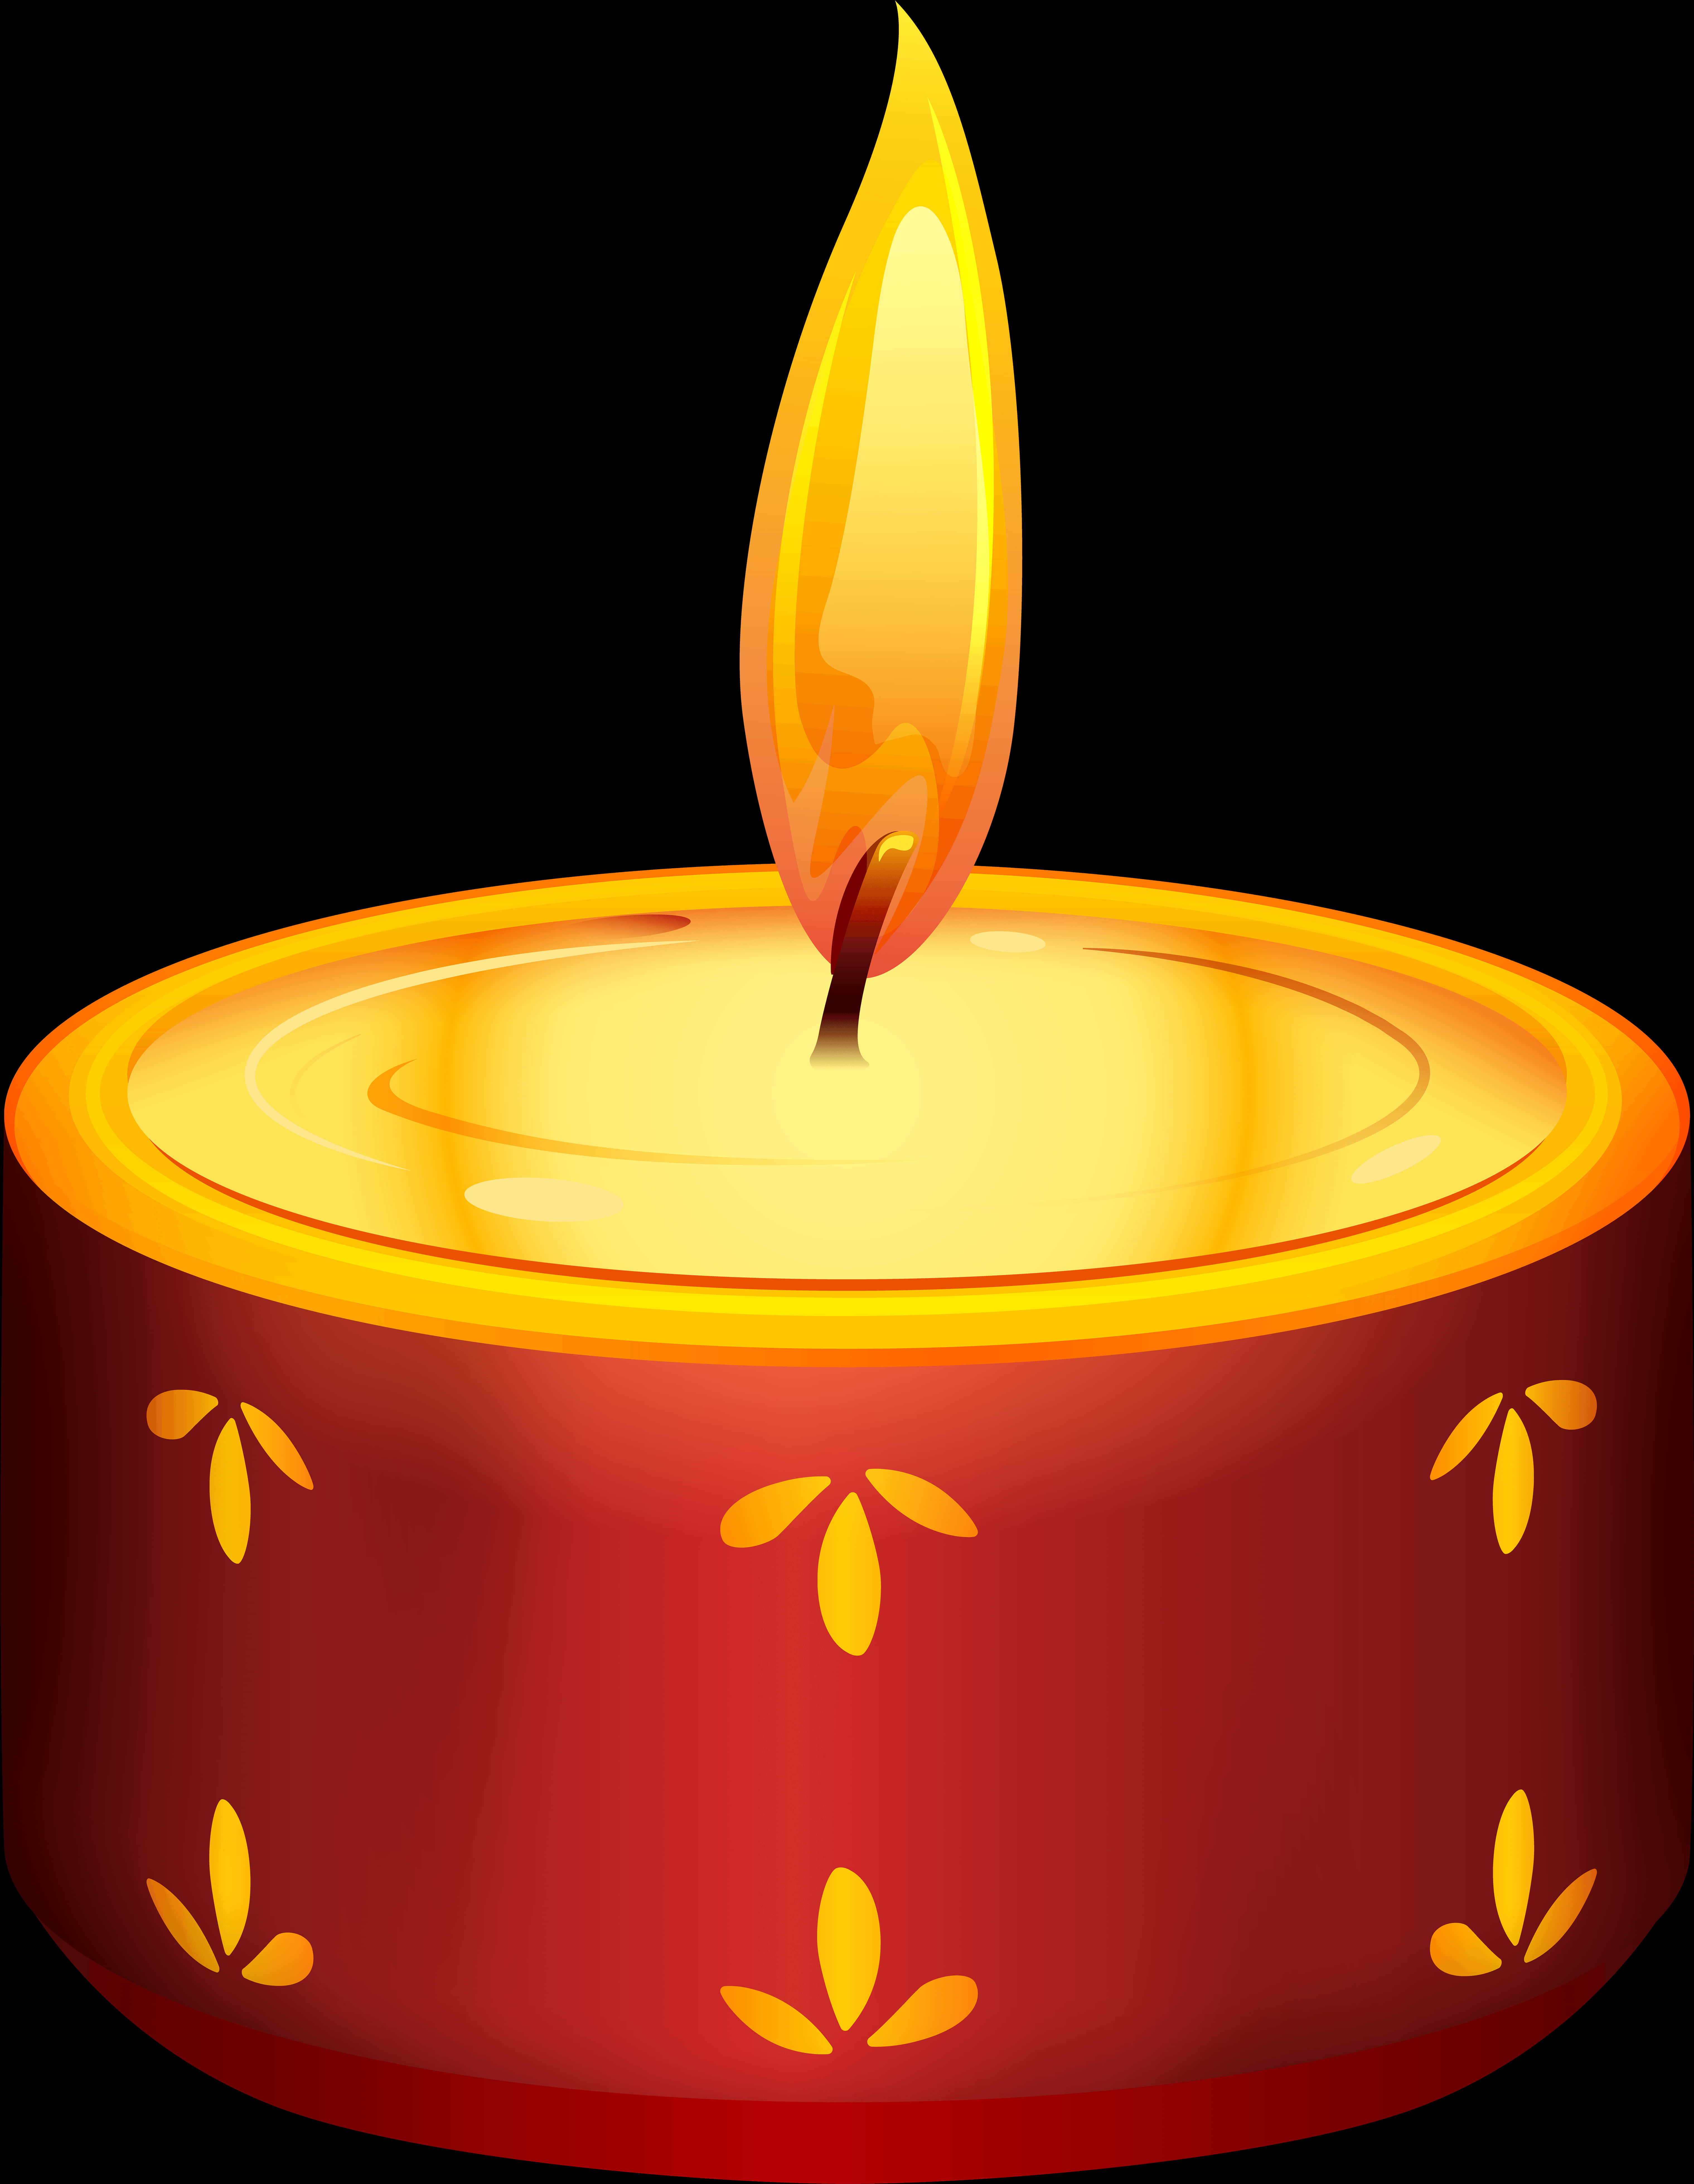 Diwali Festival Illuminated Candle